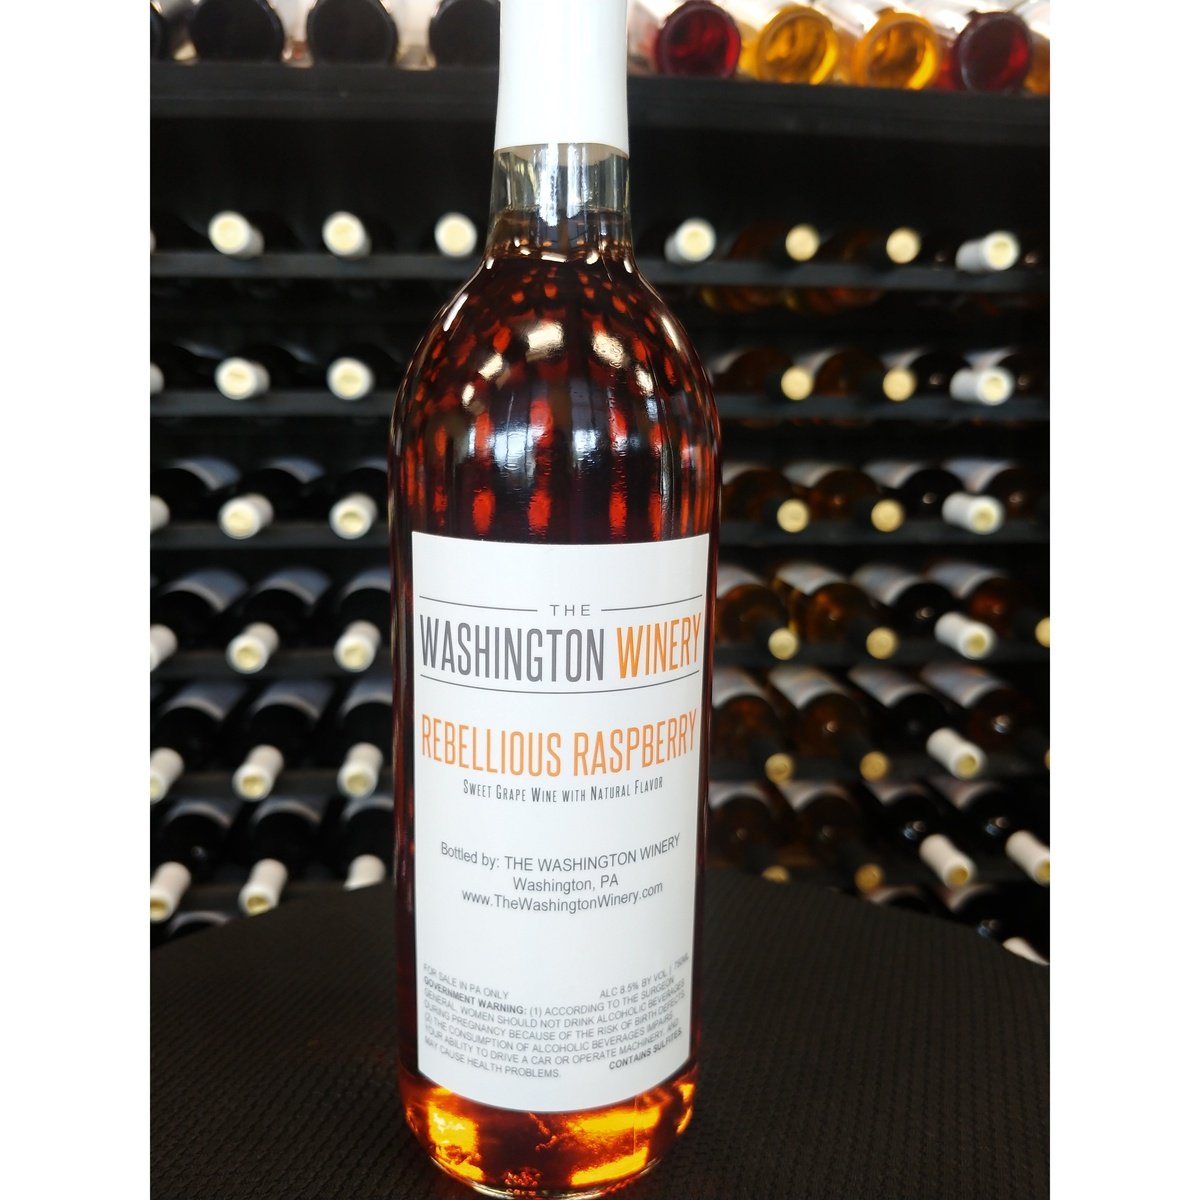 Washington Winery - Rebellious Raspberry - 750mL Bottle